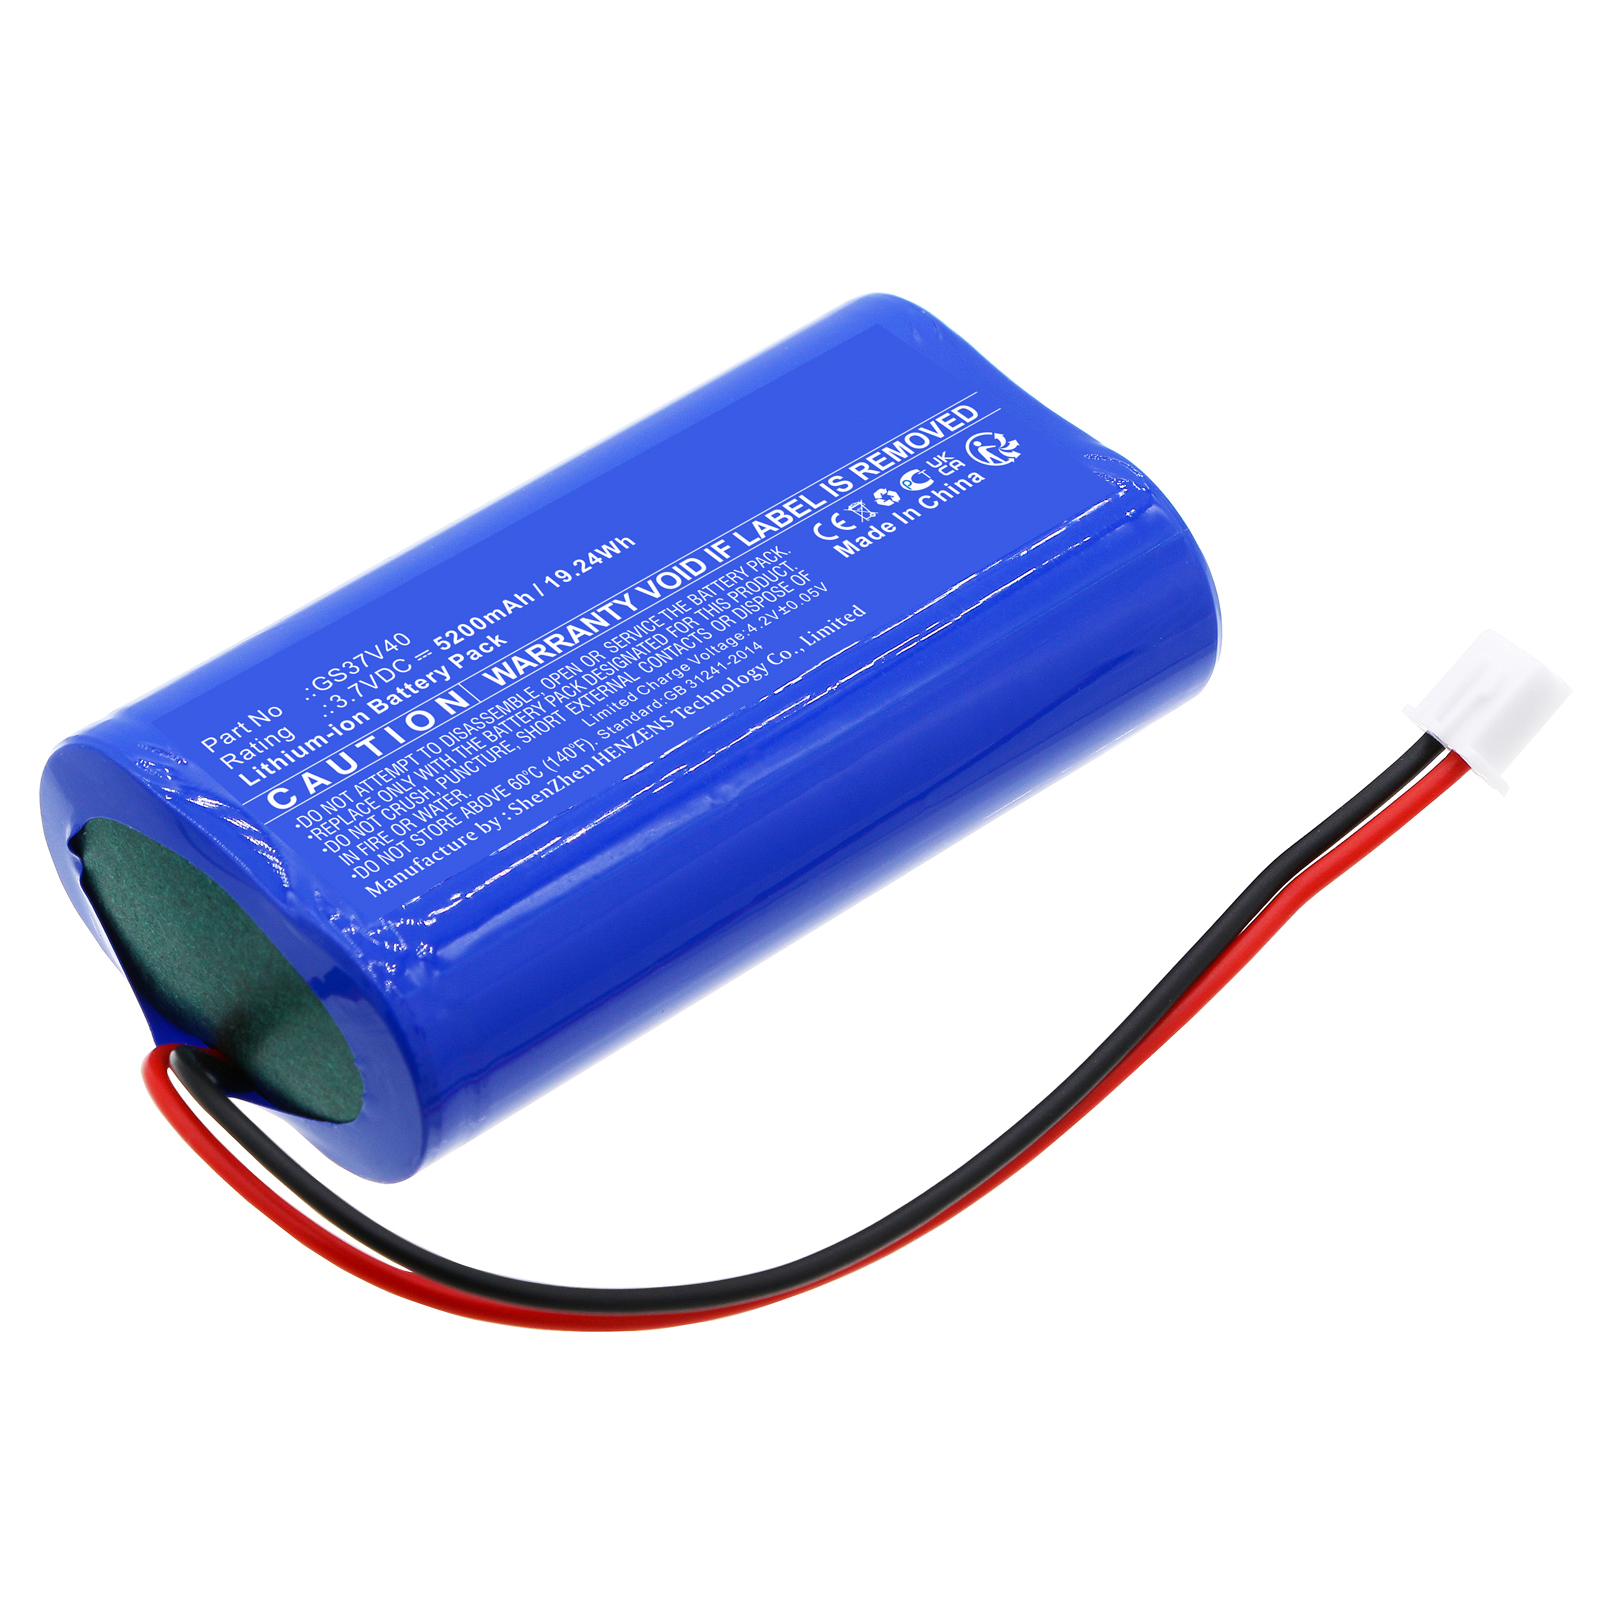 Synergy Digital Solar Battery, Compatible with Gama Sonic GS37V40 Solar Battery (Li-ion, 3.7V, 5200mAh)